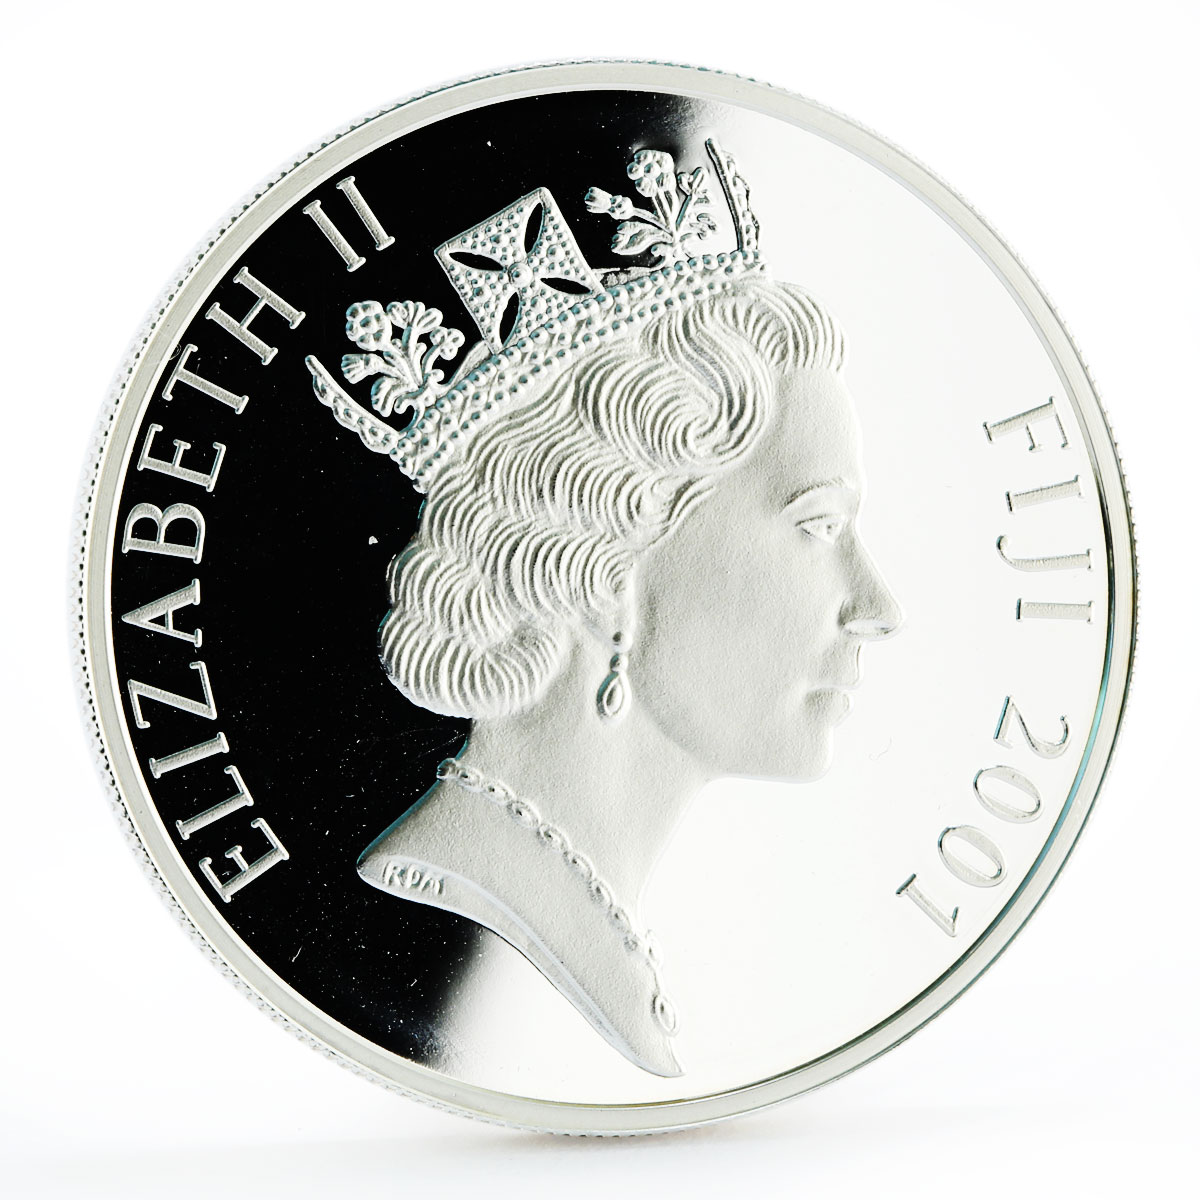 Fiji 10 dollars Sailing Ships series HMS Providence Ship proof silver coin 2001